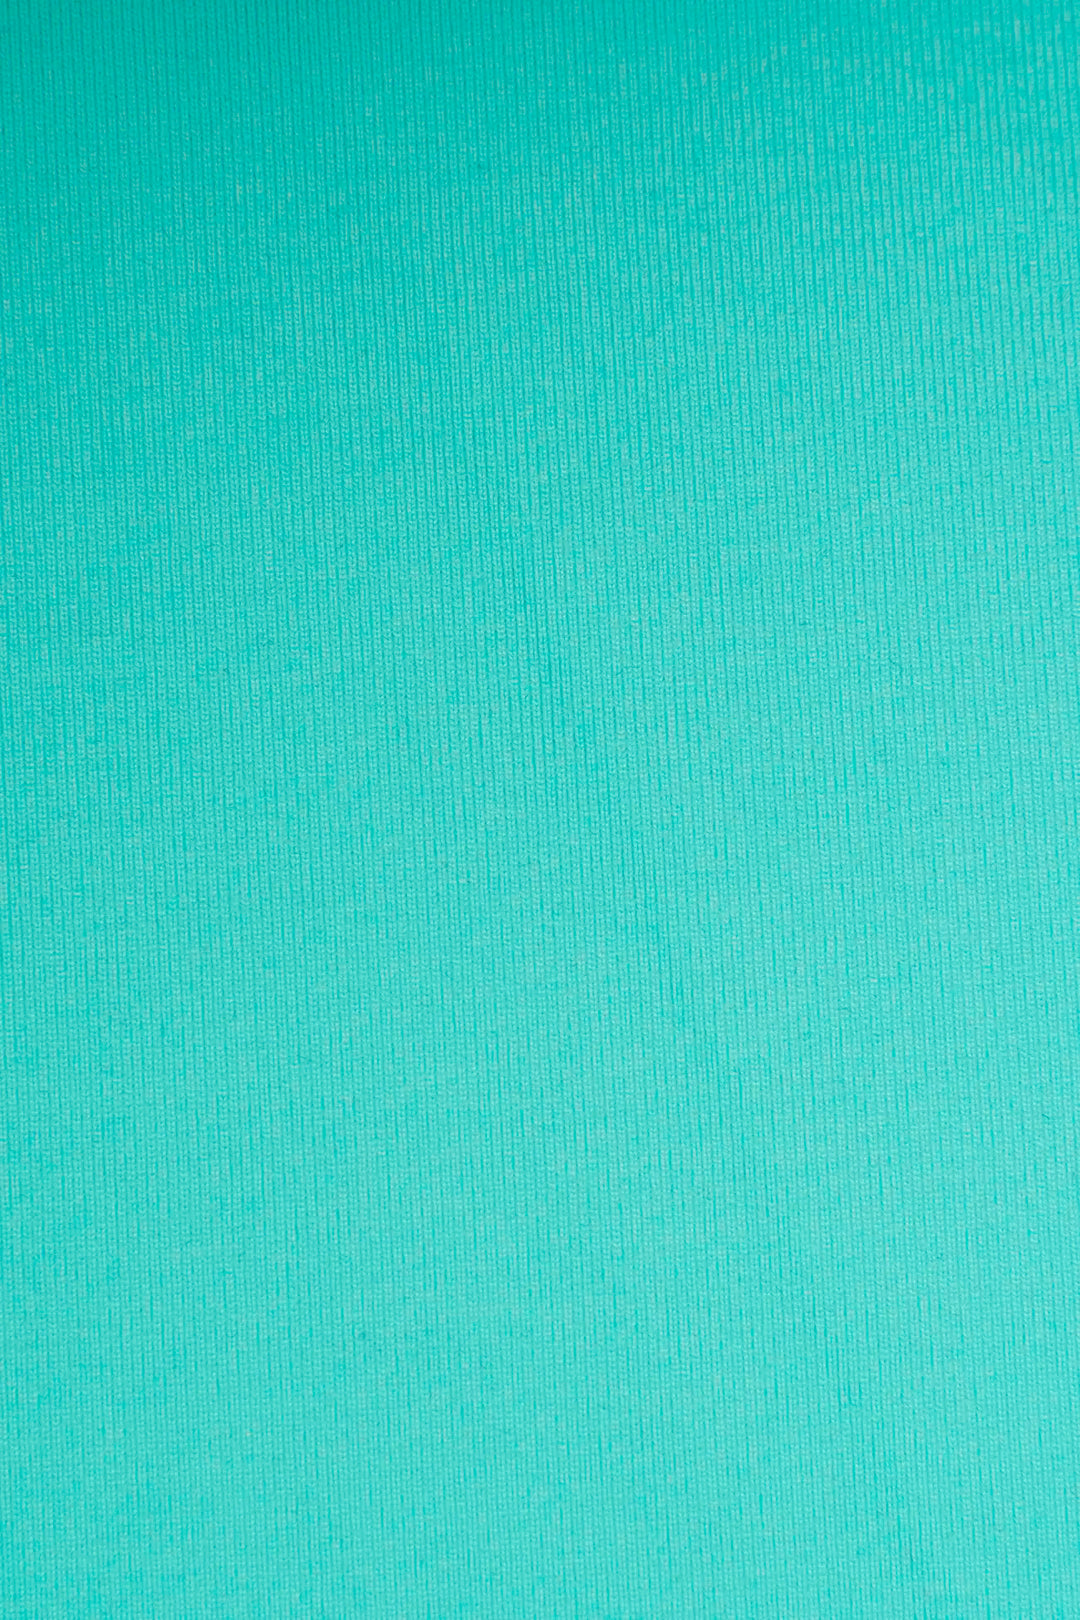 Turquoise Nylon Spandex Stretch Fabric